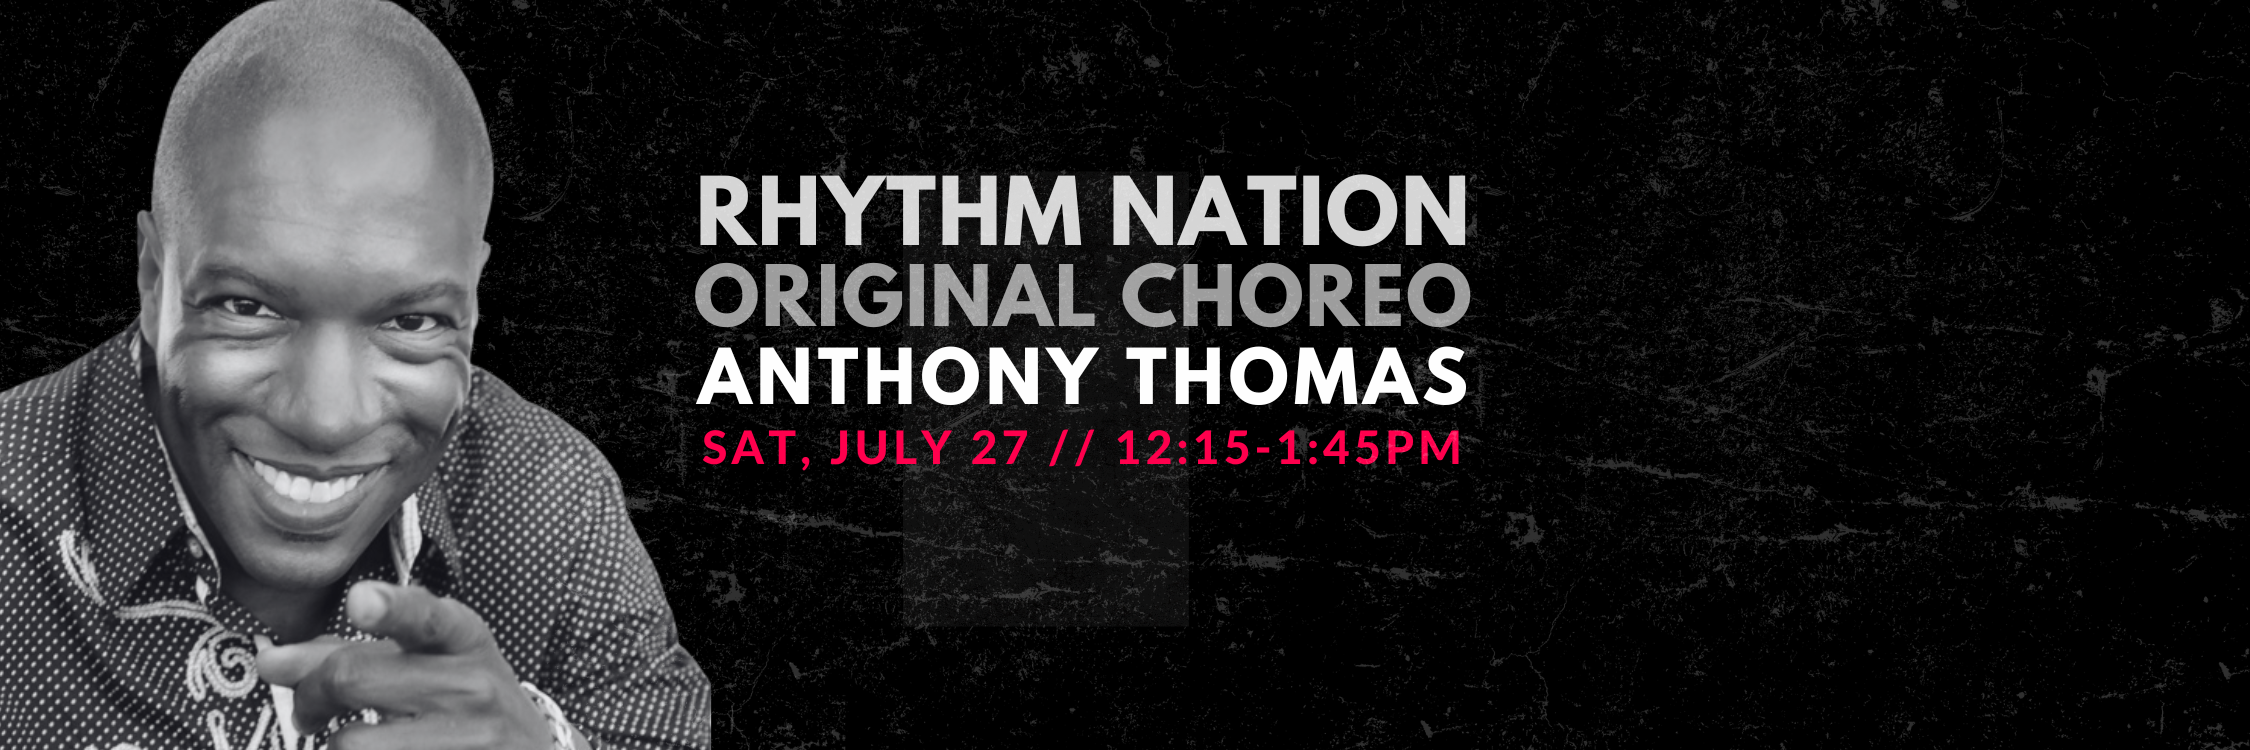 RHYTHM NATION Original Choreography